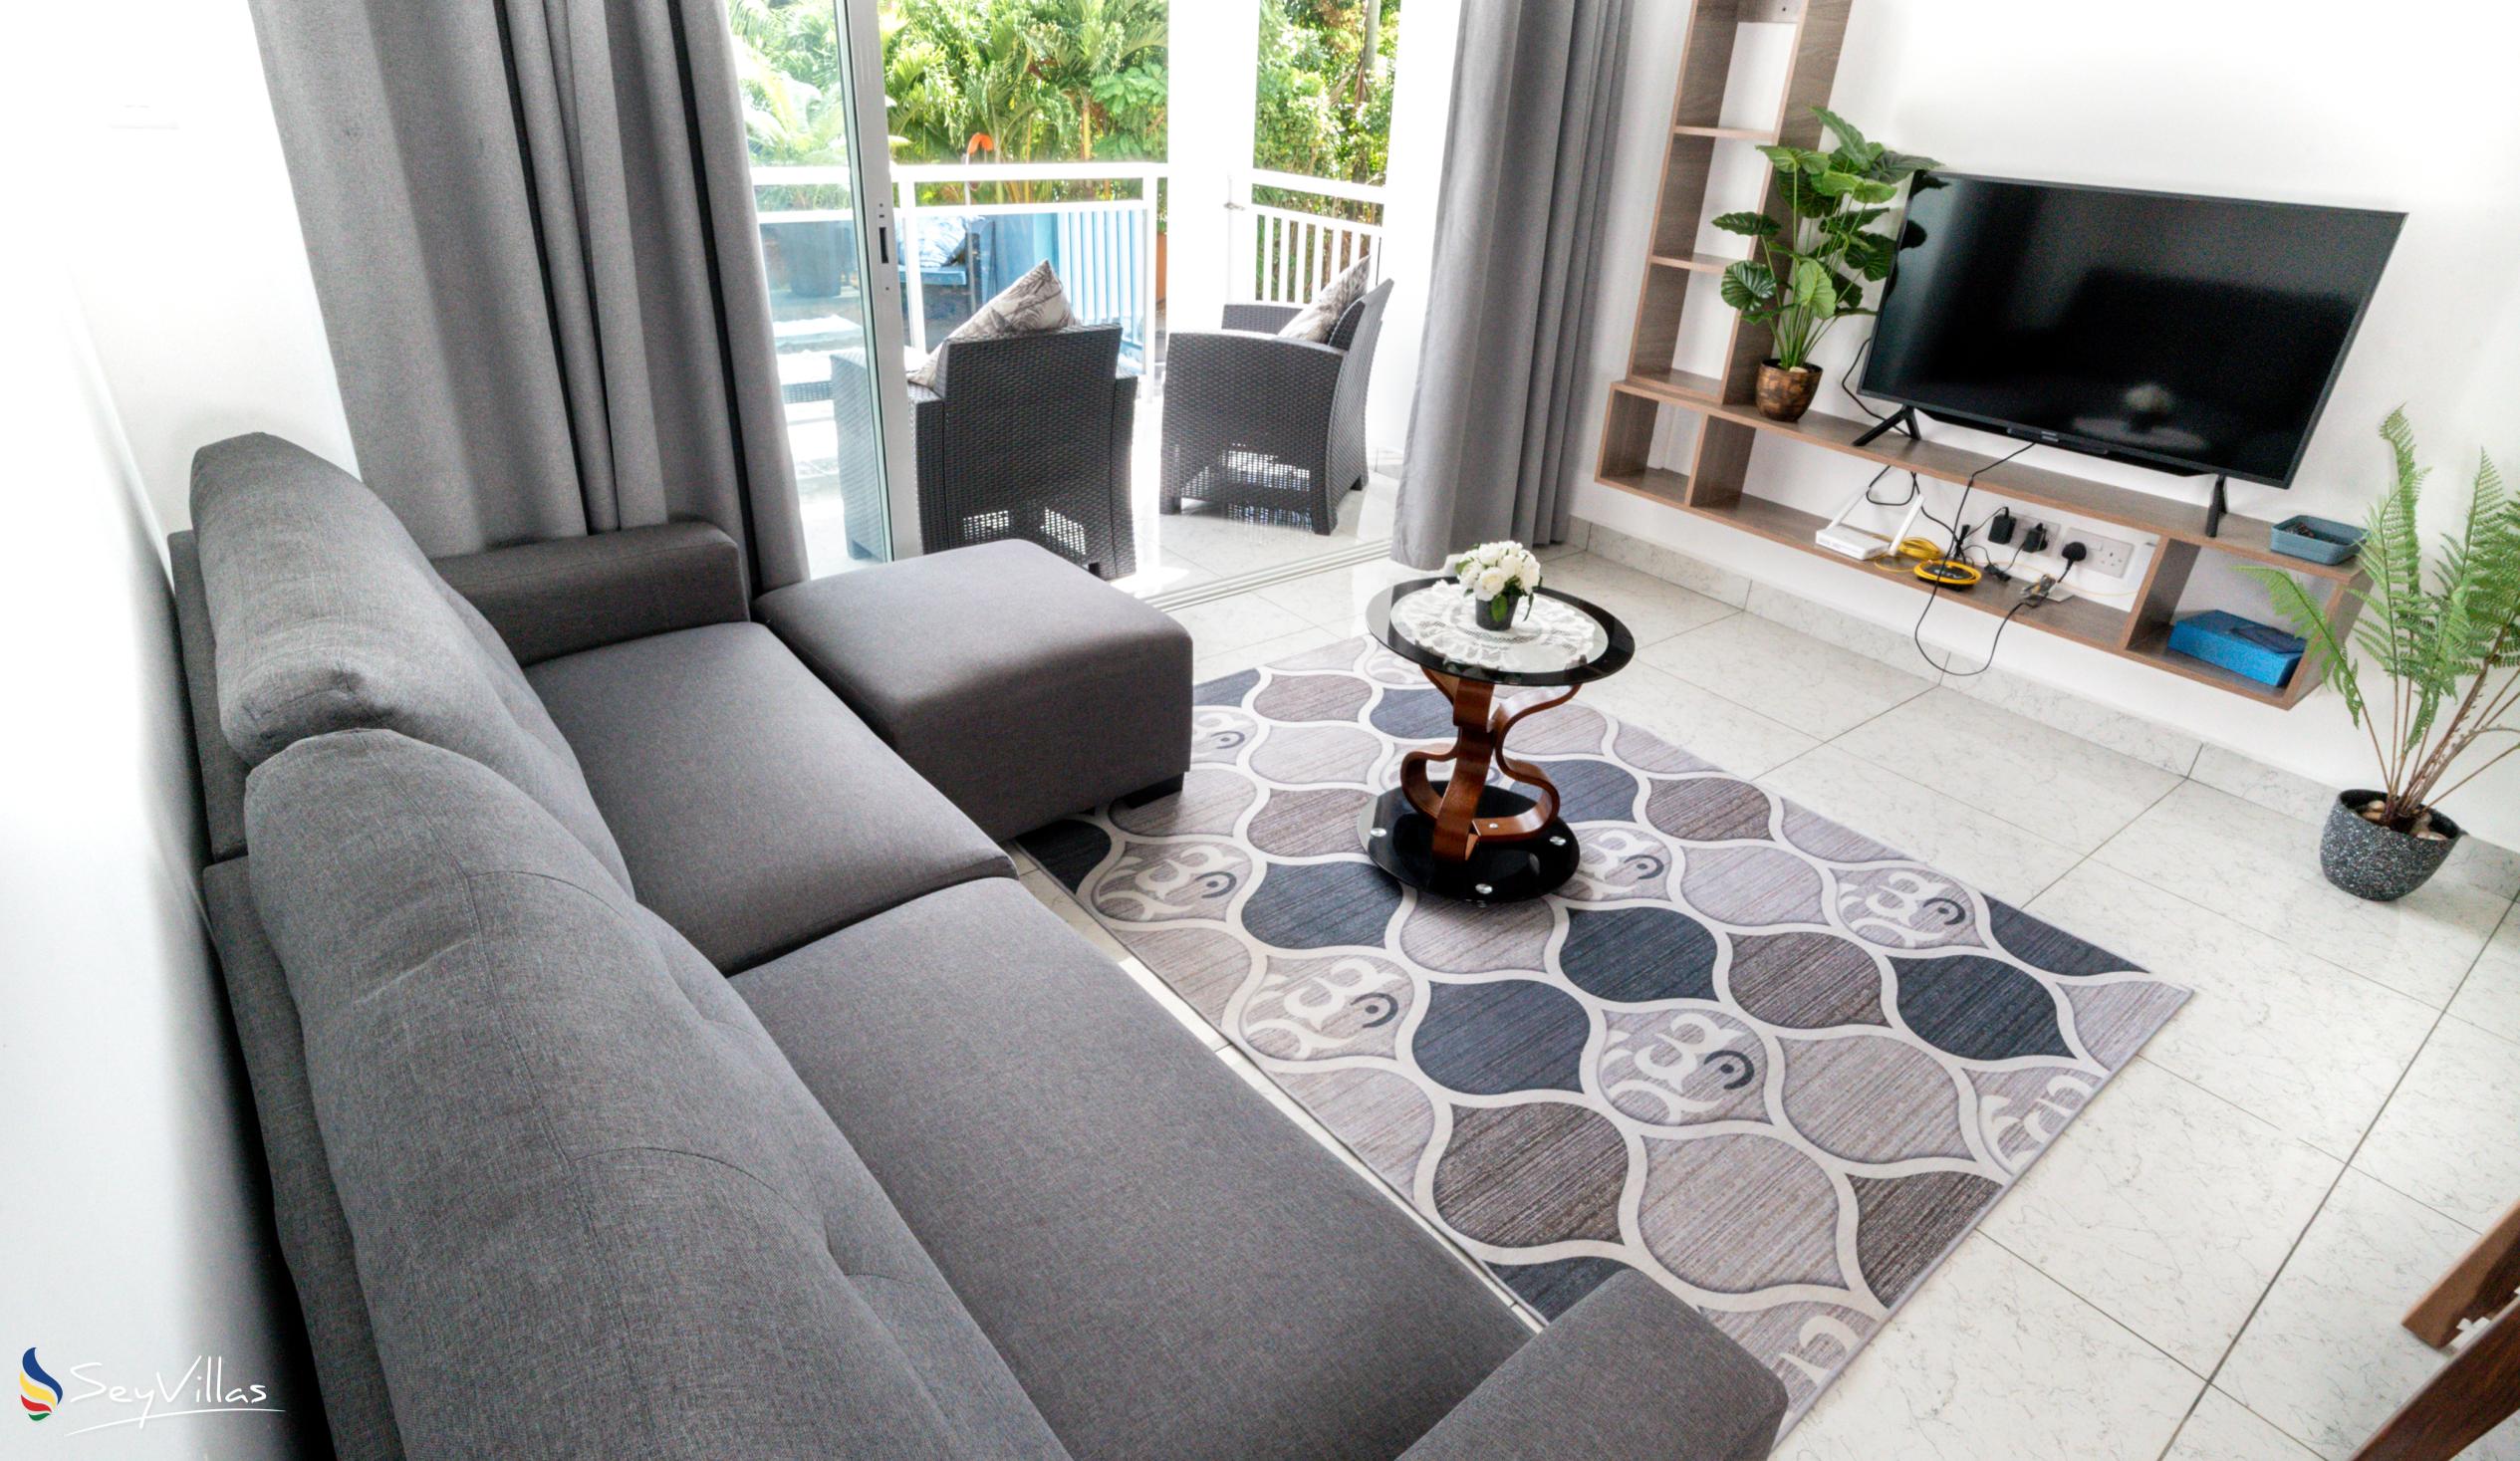 Foto 27: TES Self Catering - Appartement avec 1 chambre - Mahé (Seychelles)